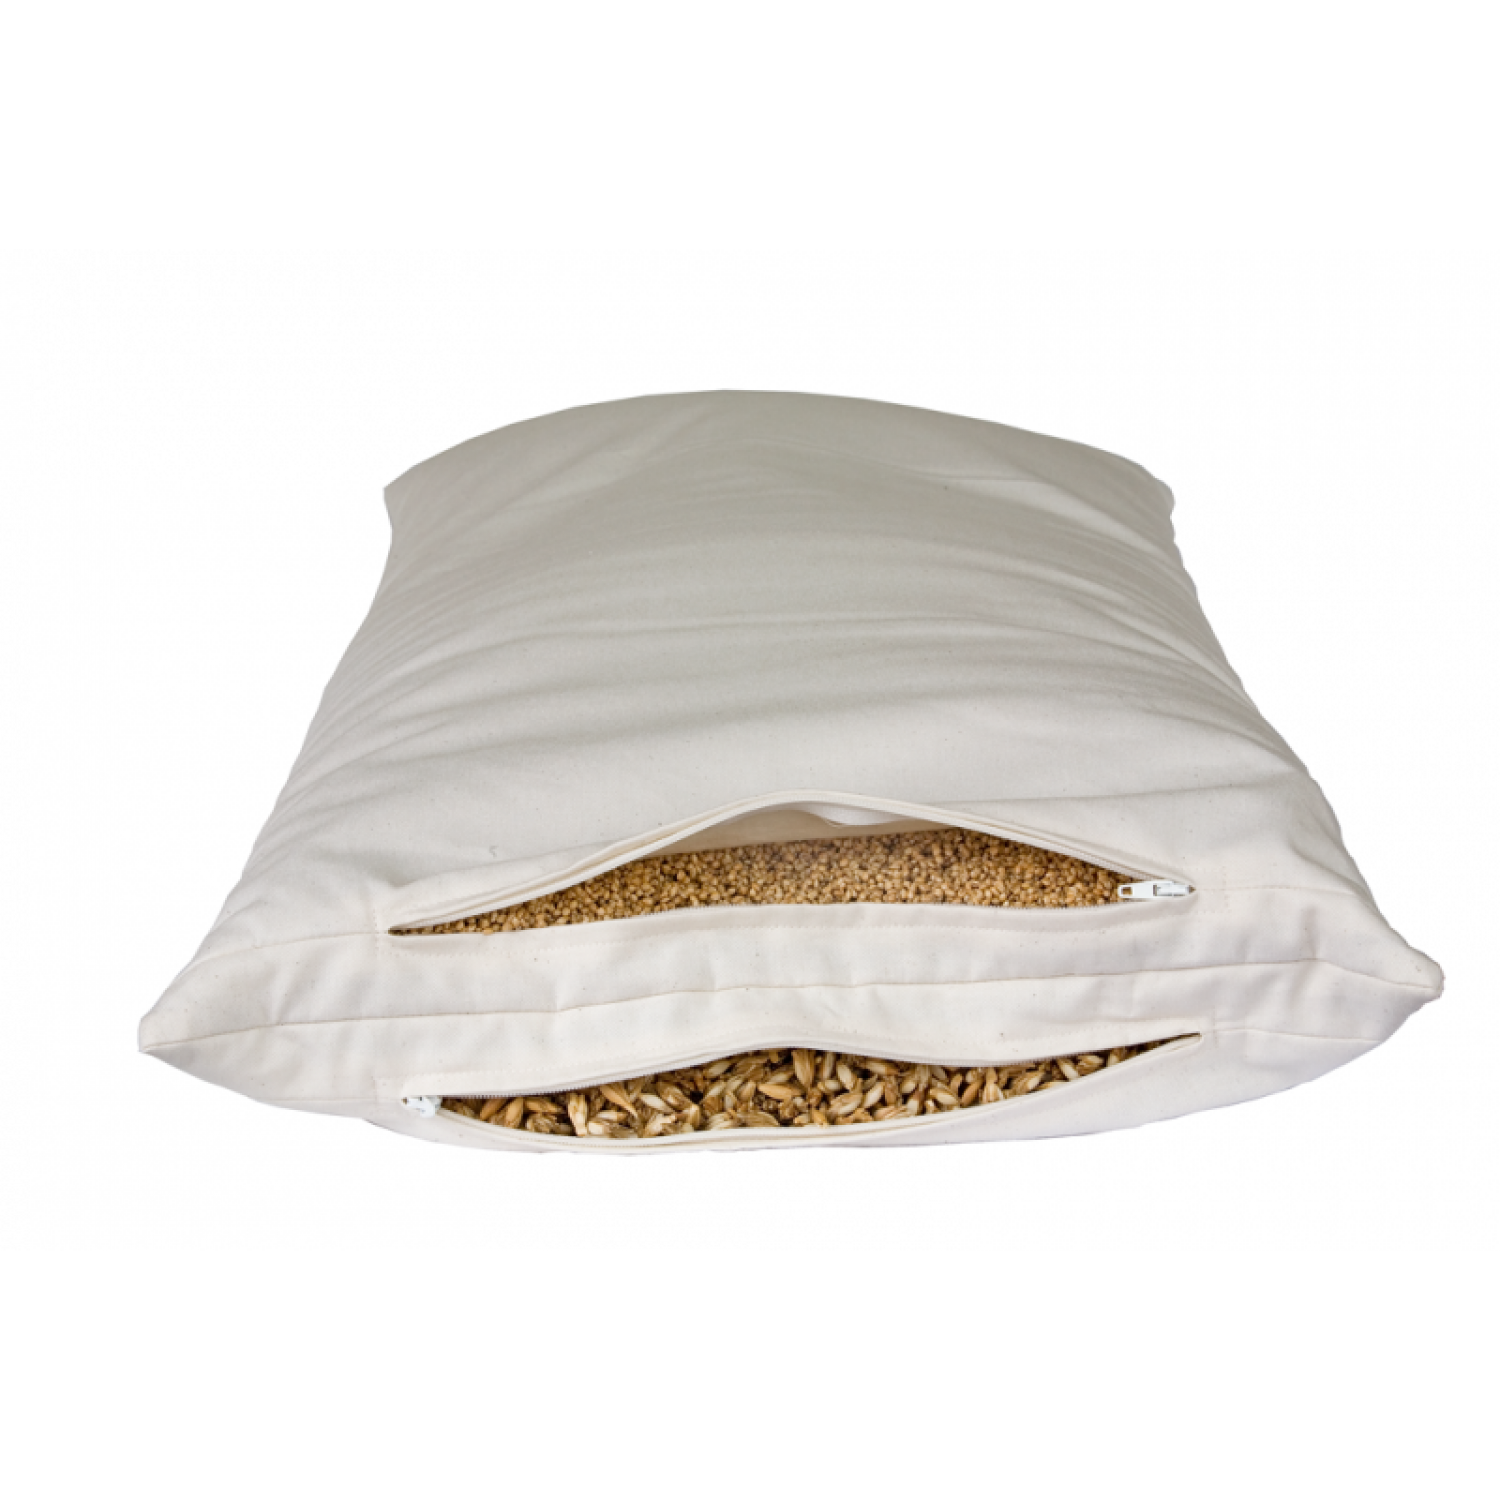 Combined 2-Chamber Pillow with organic spelt & millet husks | speltex